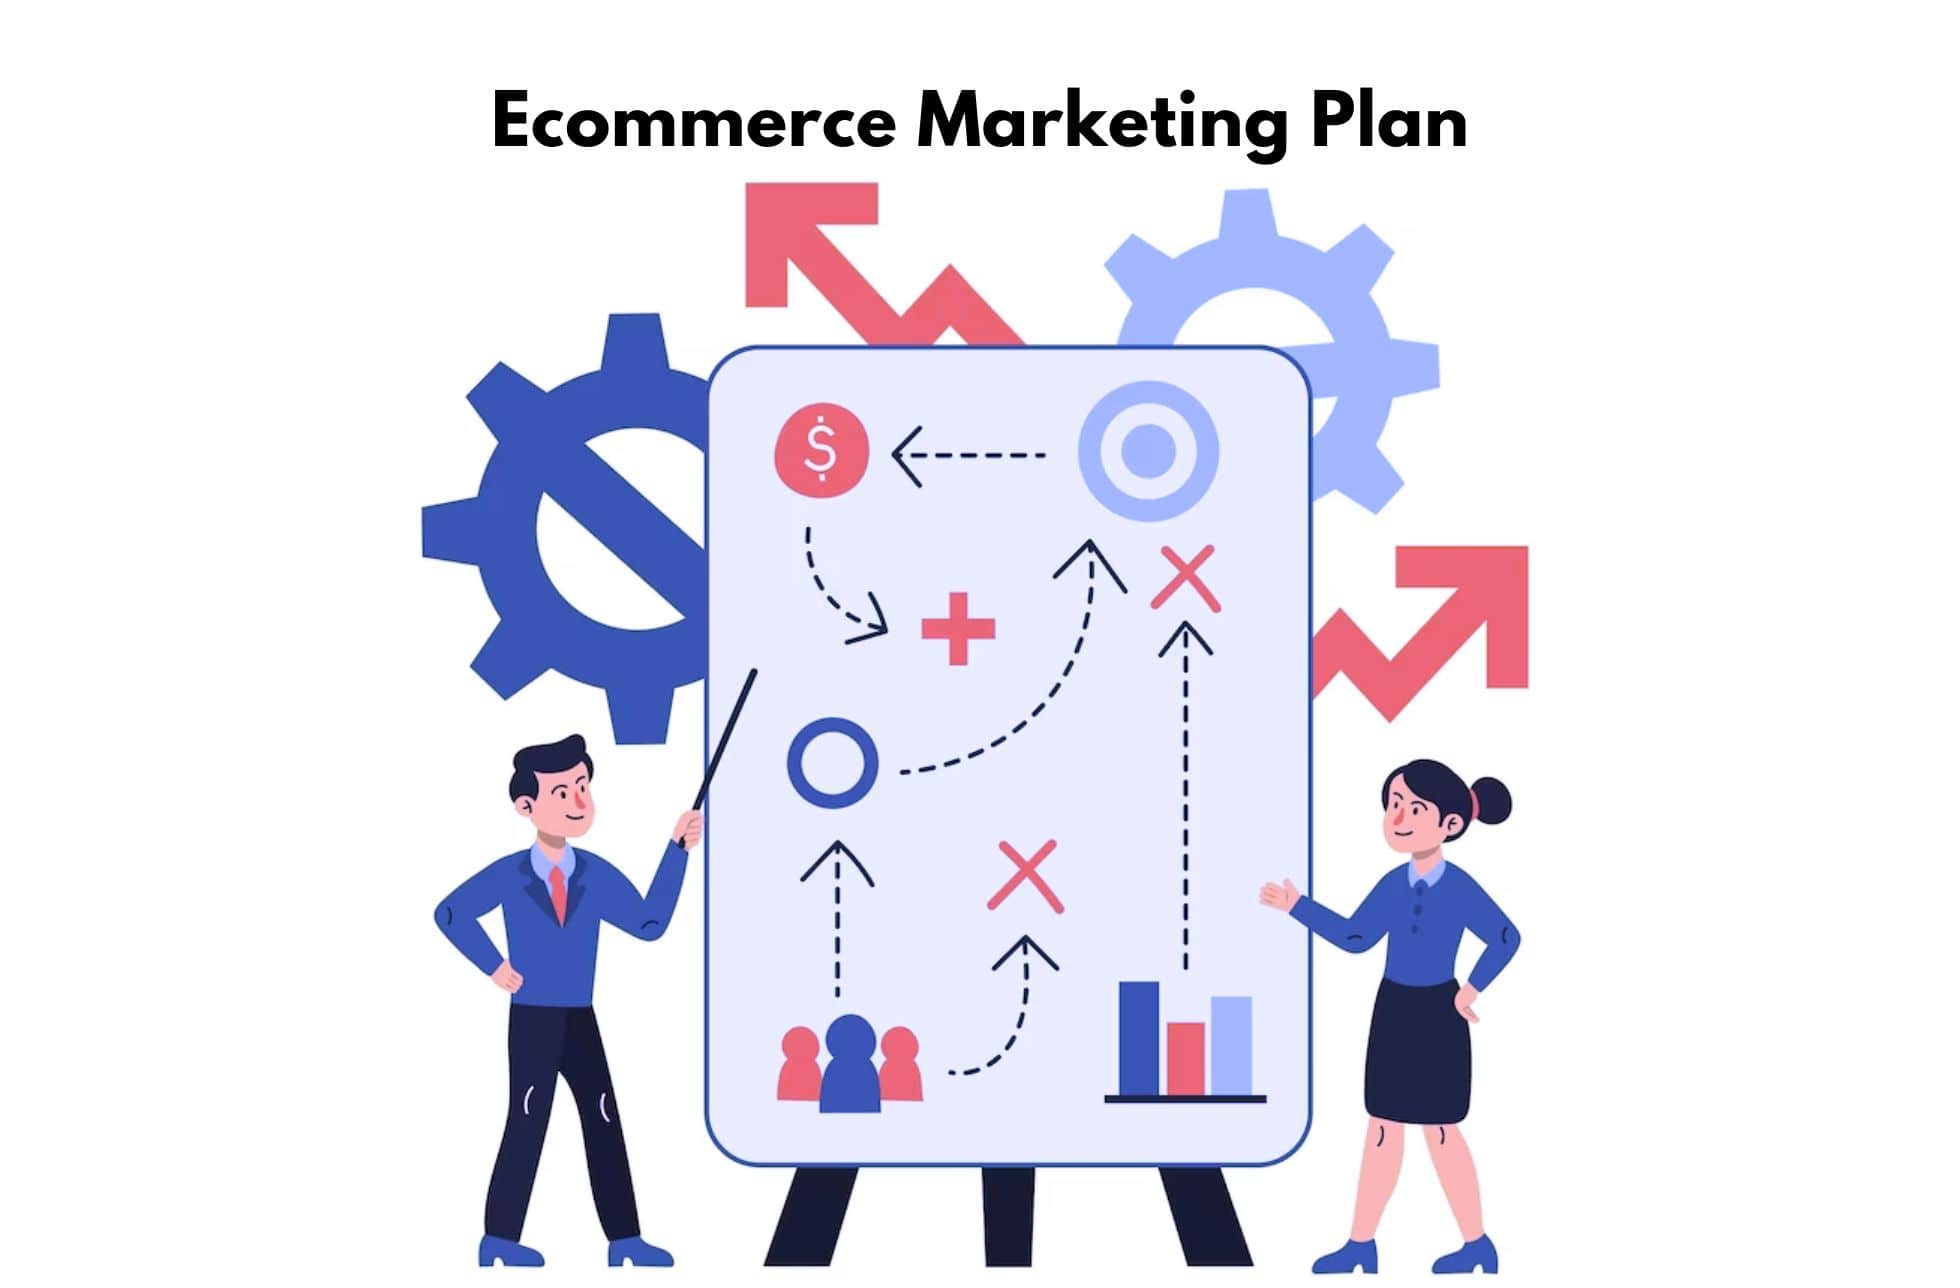 Ecommerce marketing plan